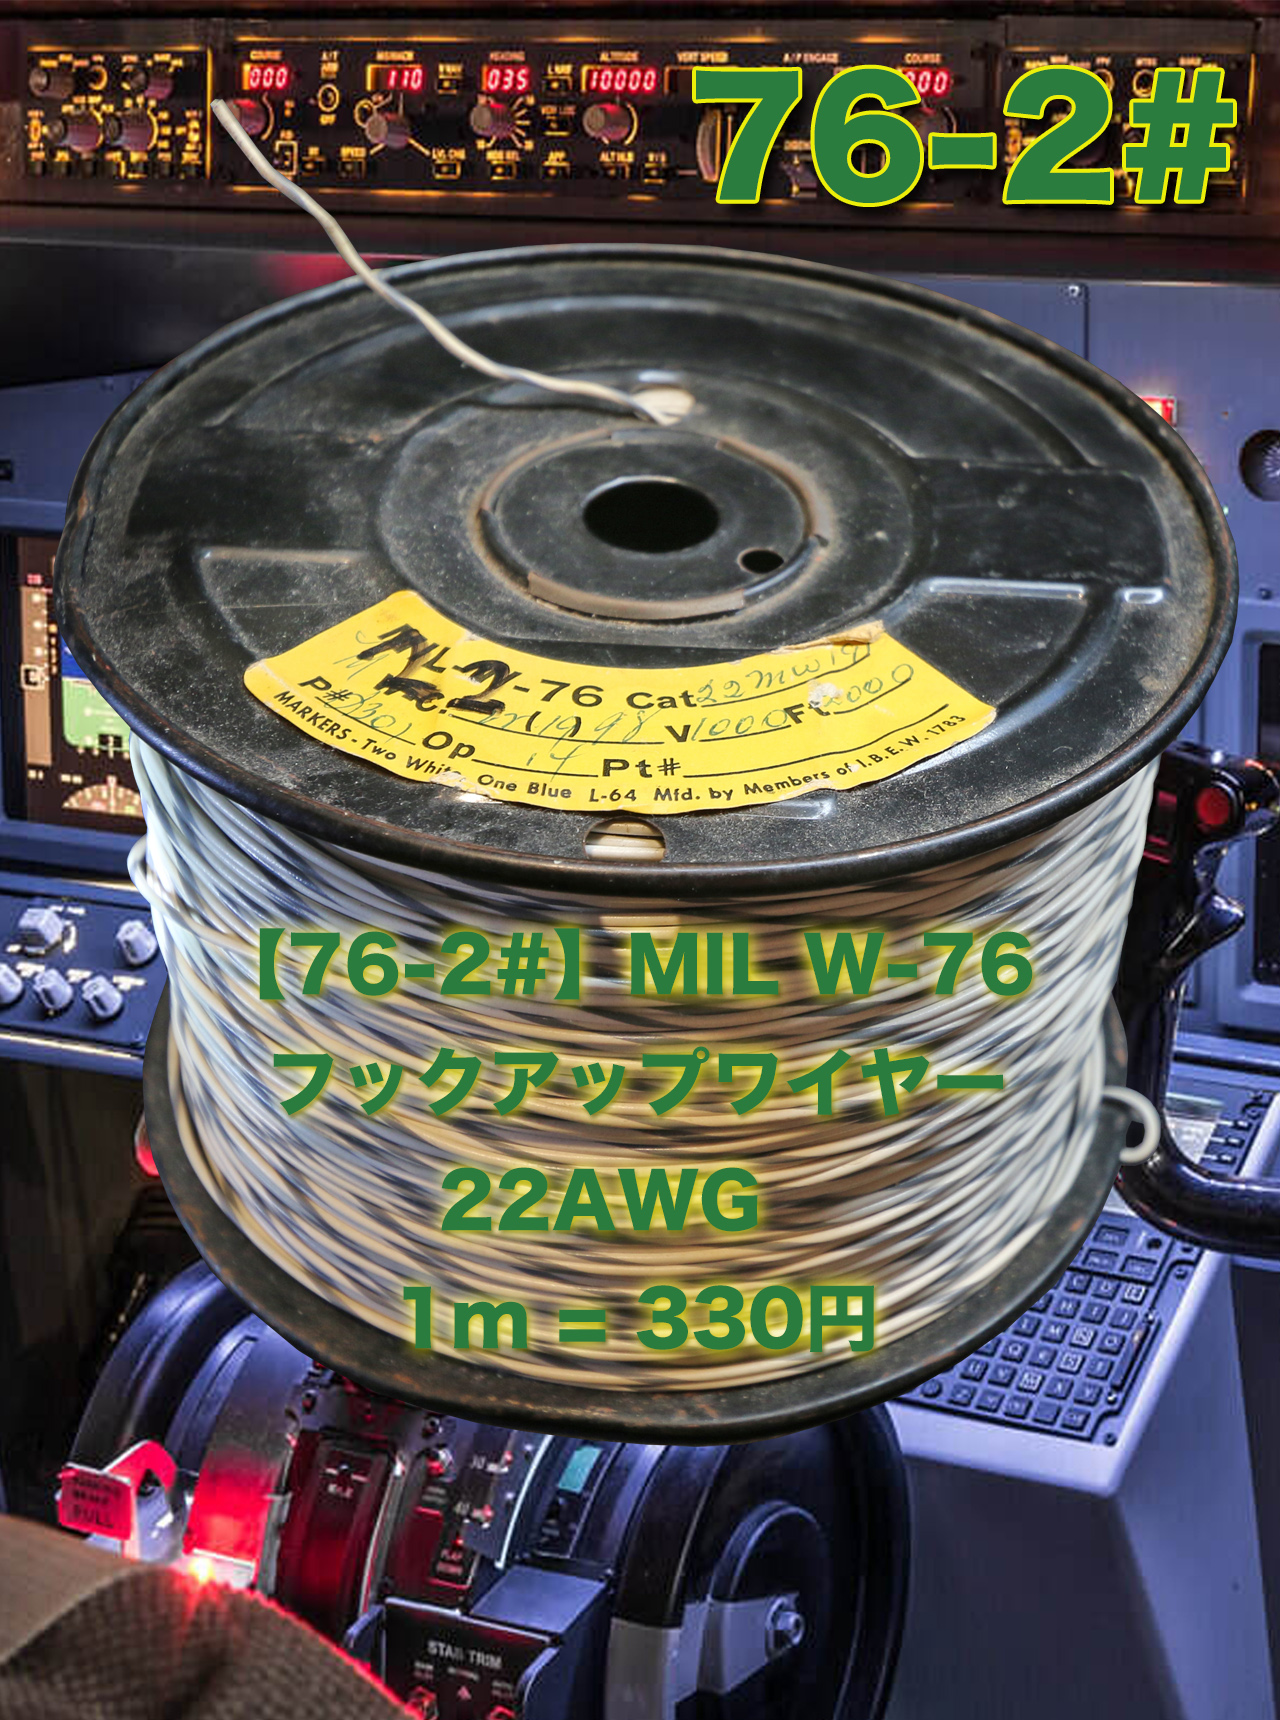 【76-2#】MIL W-76 フックアップワイヤー22AWG　 1m = 330円画像